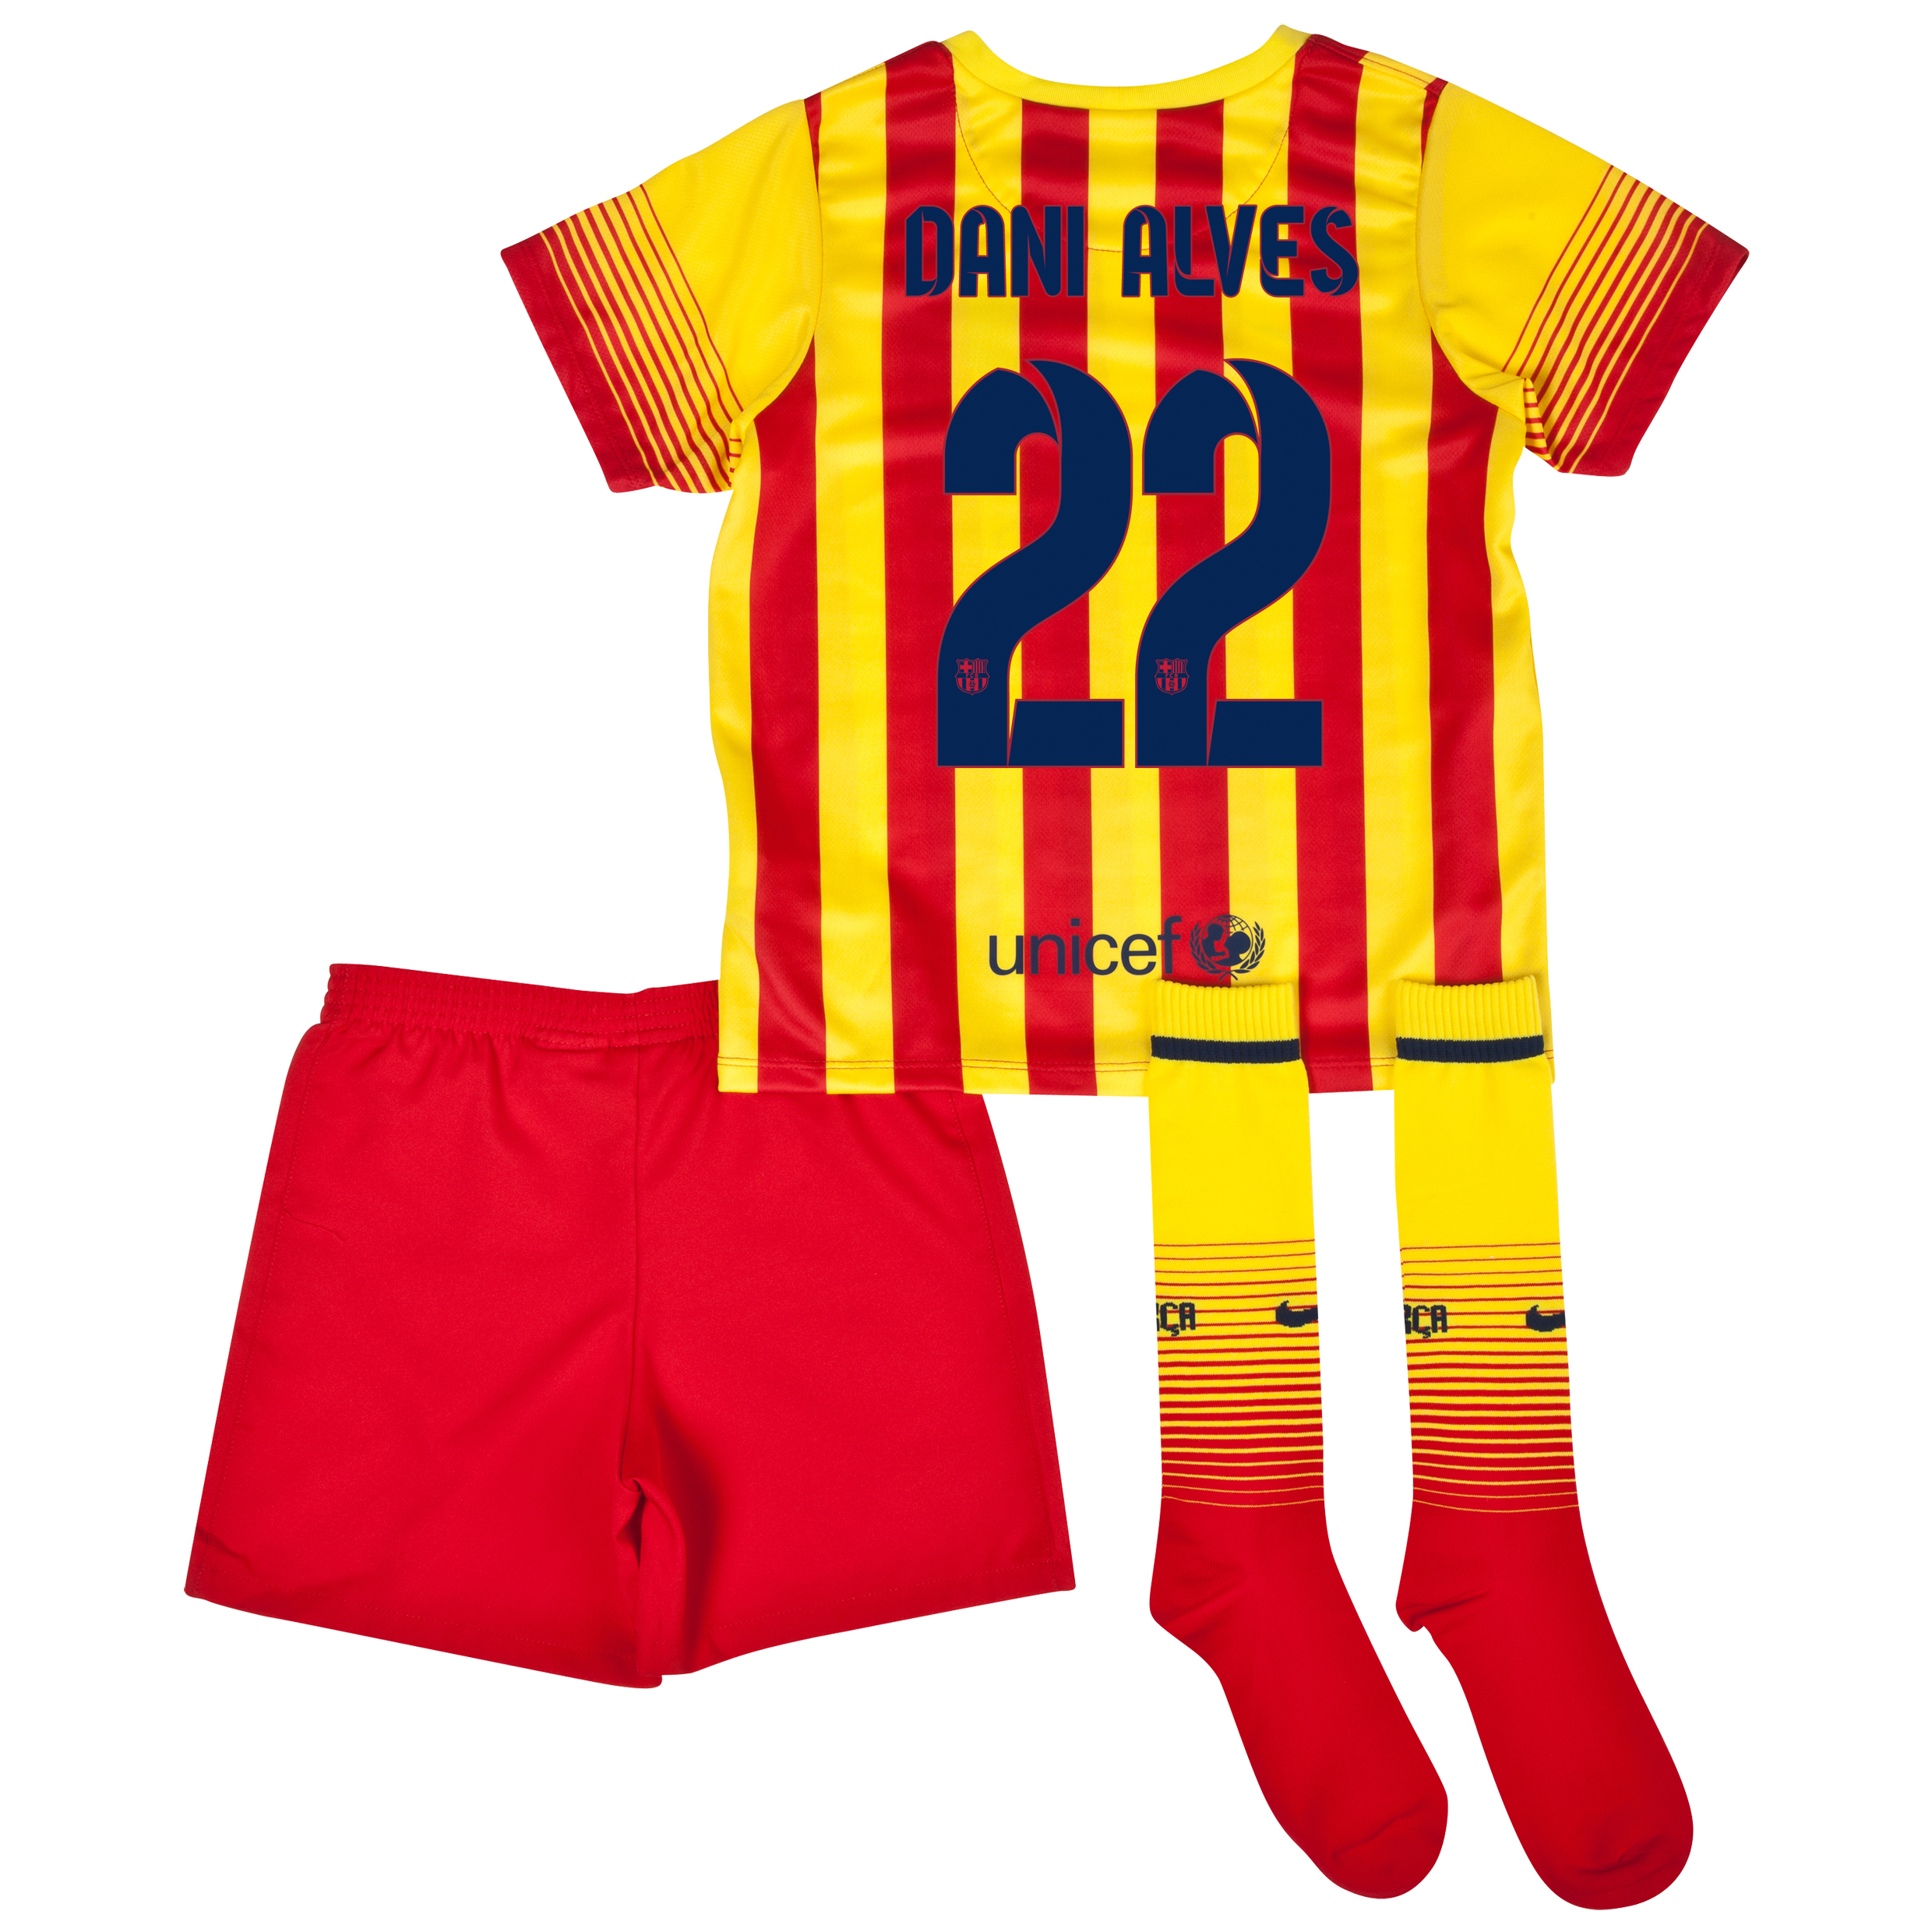 Barcelona Away Kit 2013/14 - Little Boys with Dani Alves 22 printing